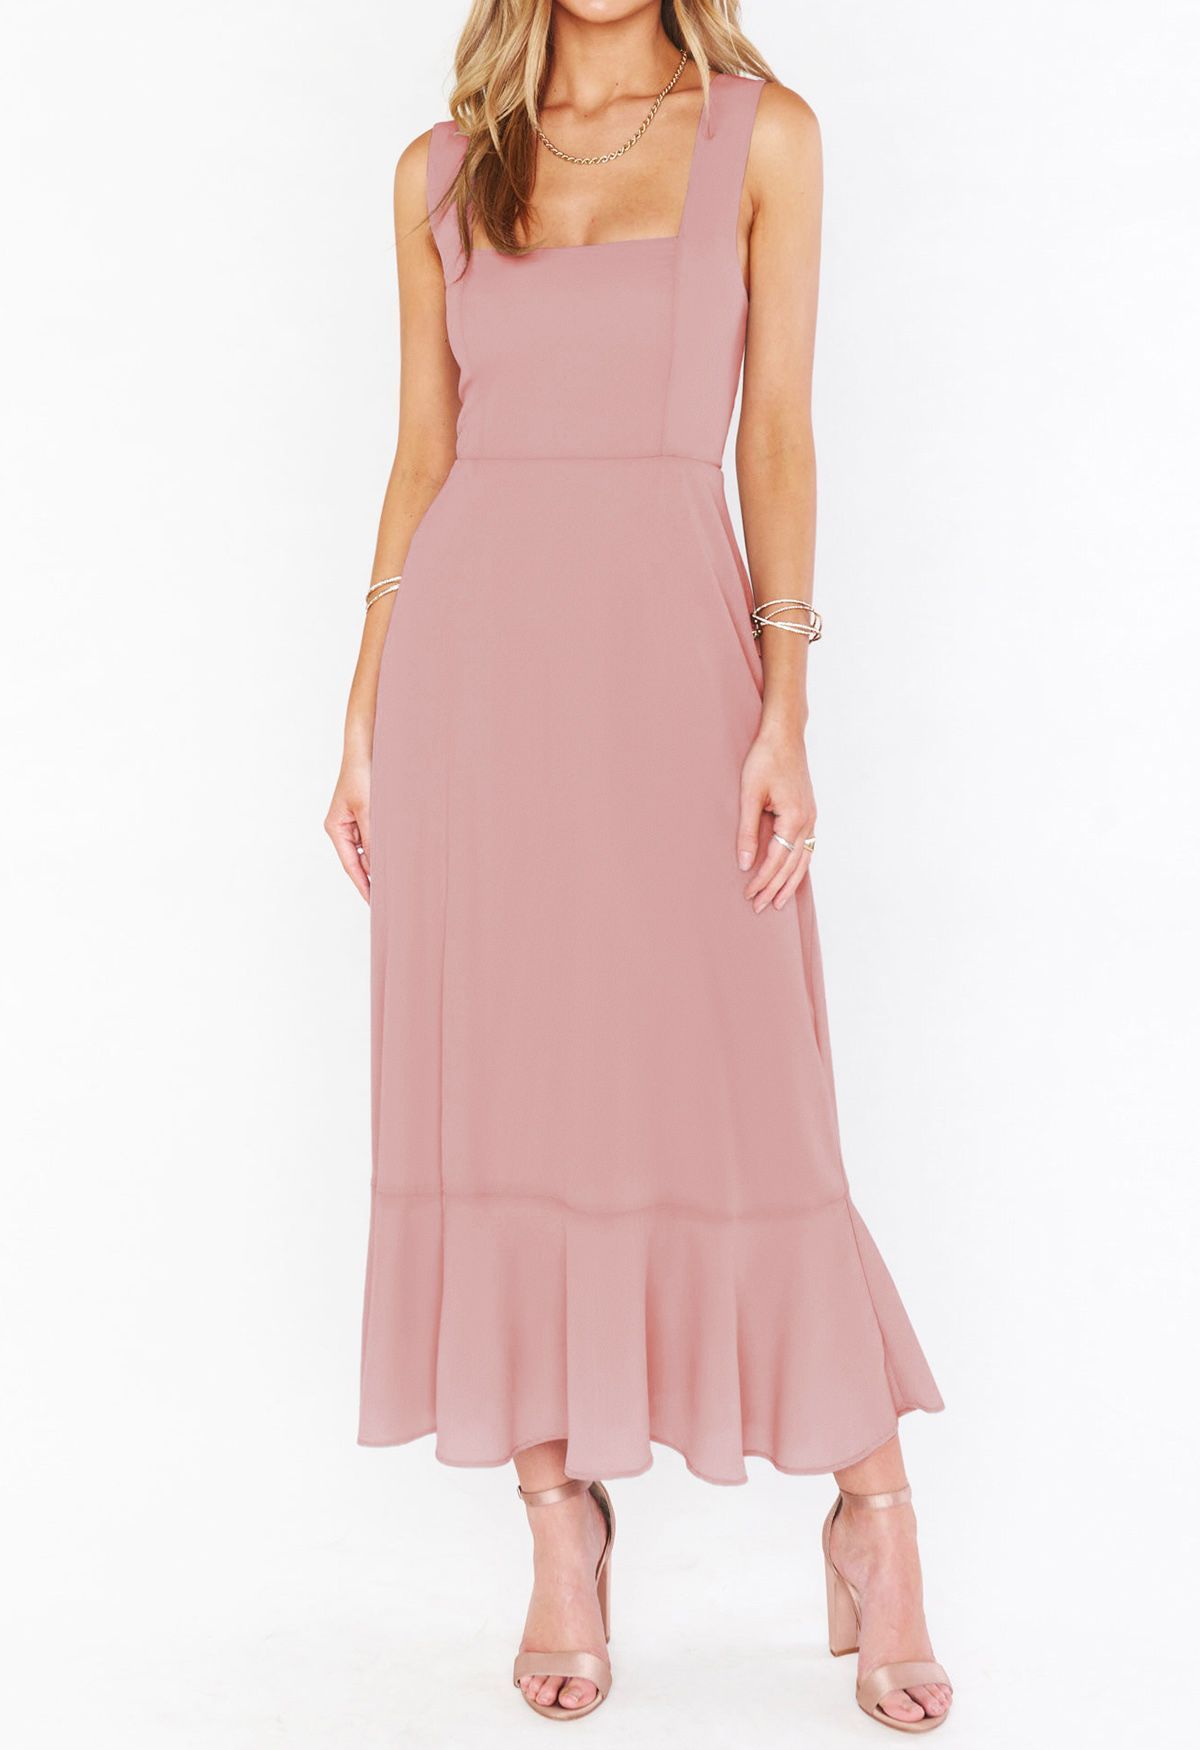 Ruffle Hem Tie-Shoulder Cami Dress in Pink | Chicwish